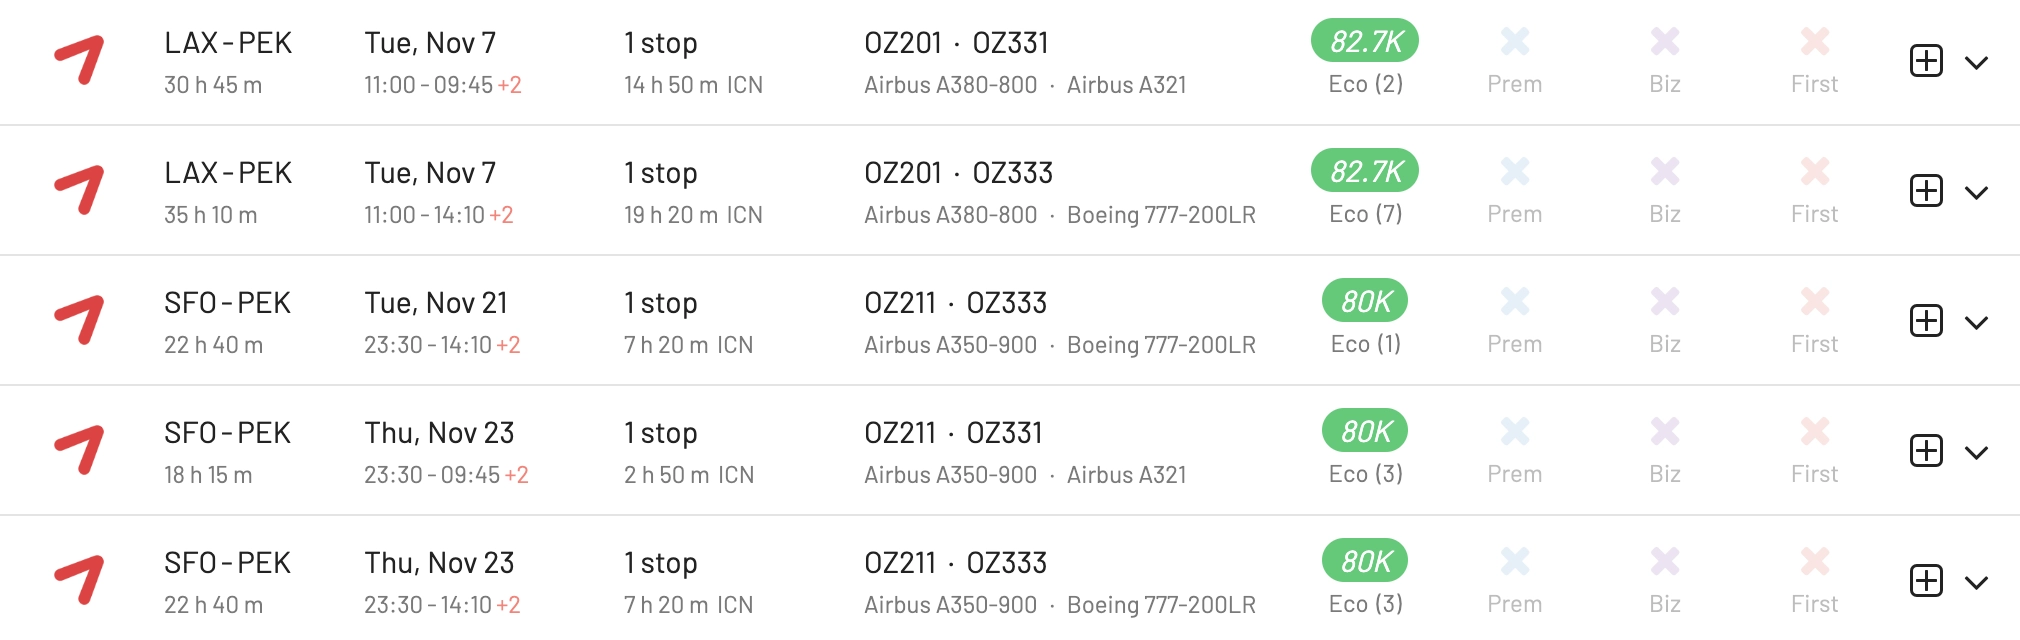 Award flights from the United States to China with Asiana (AwardFares).